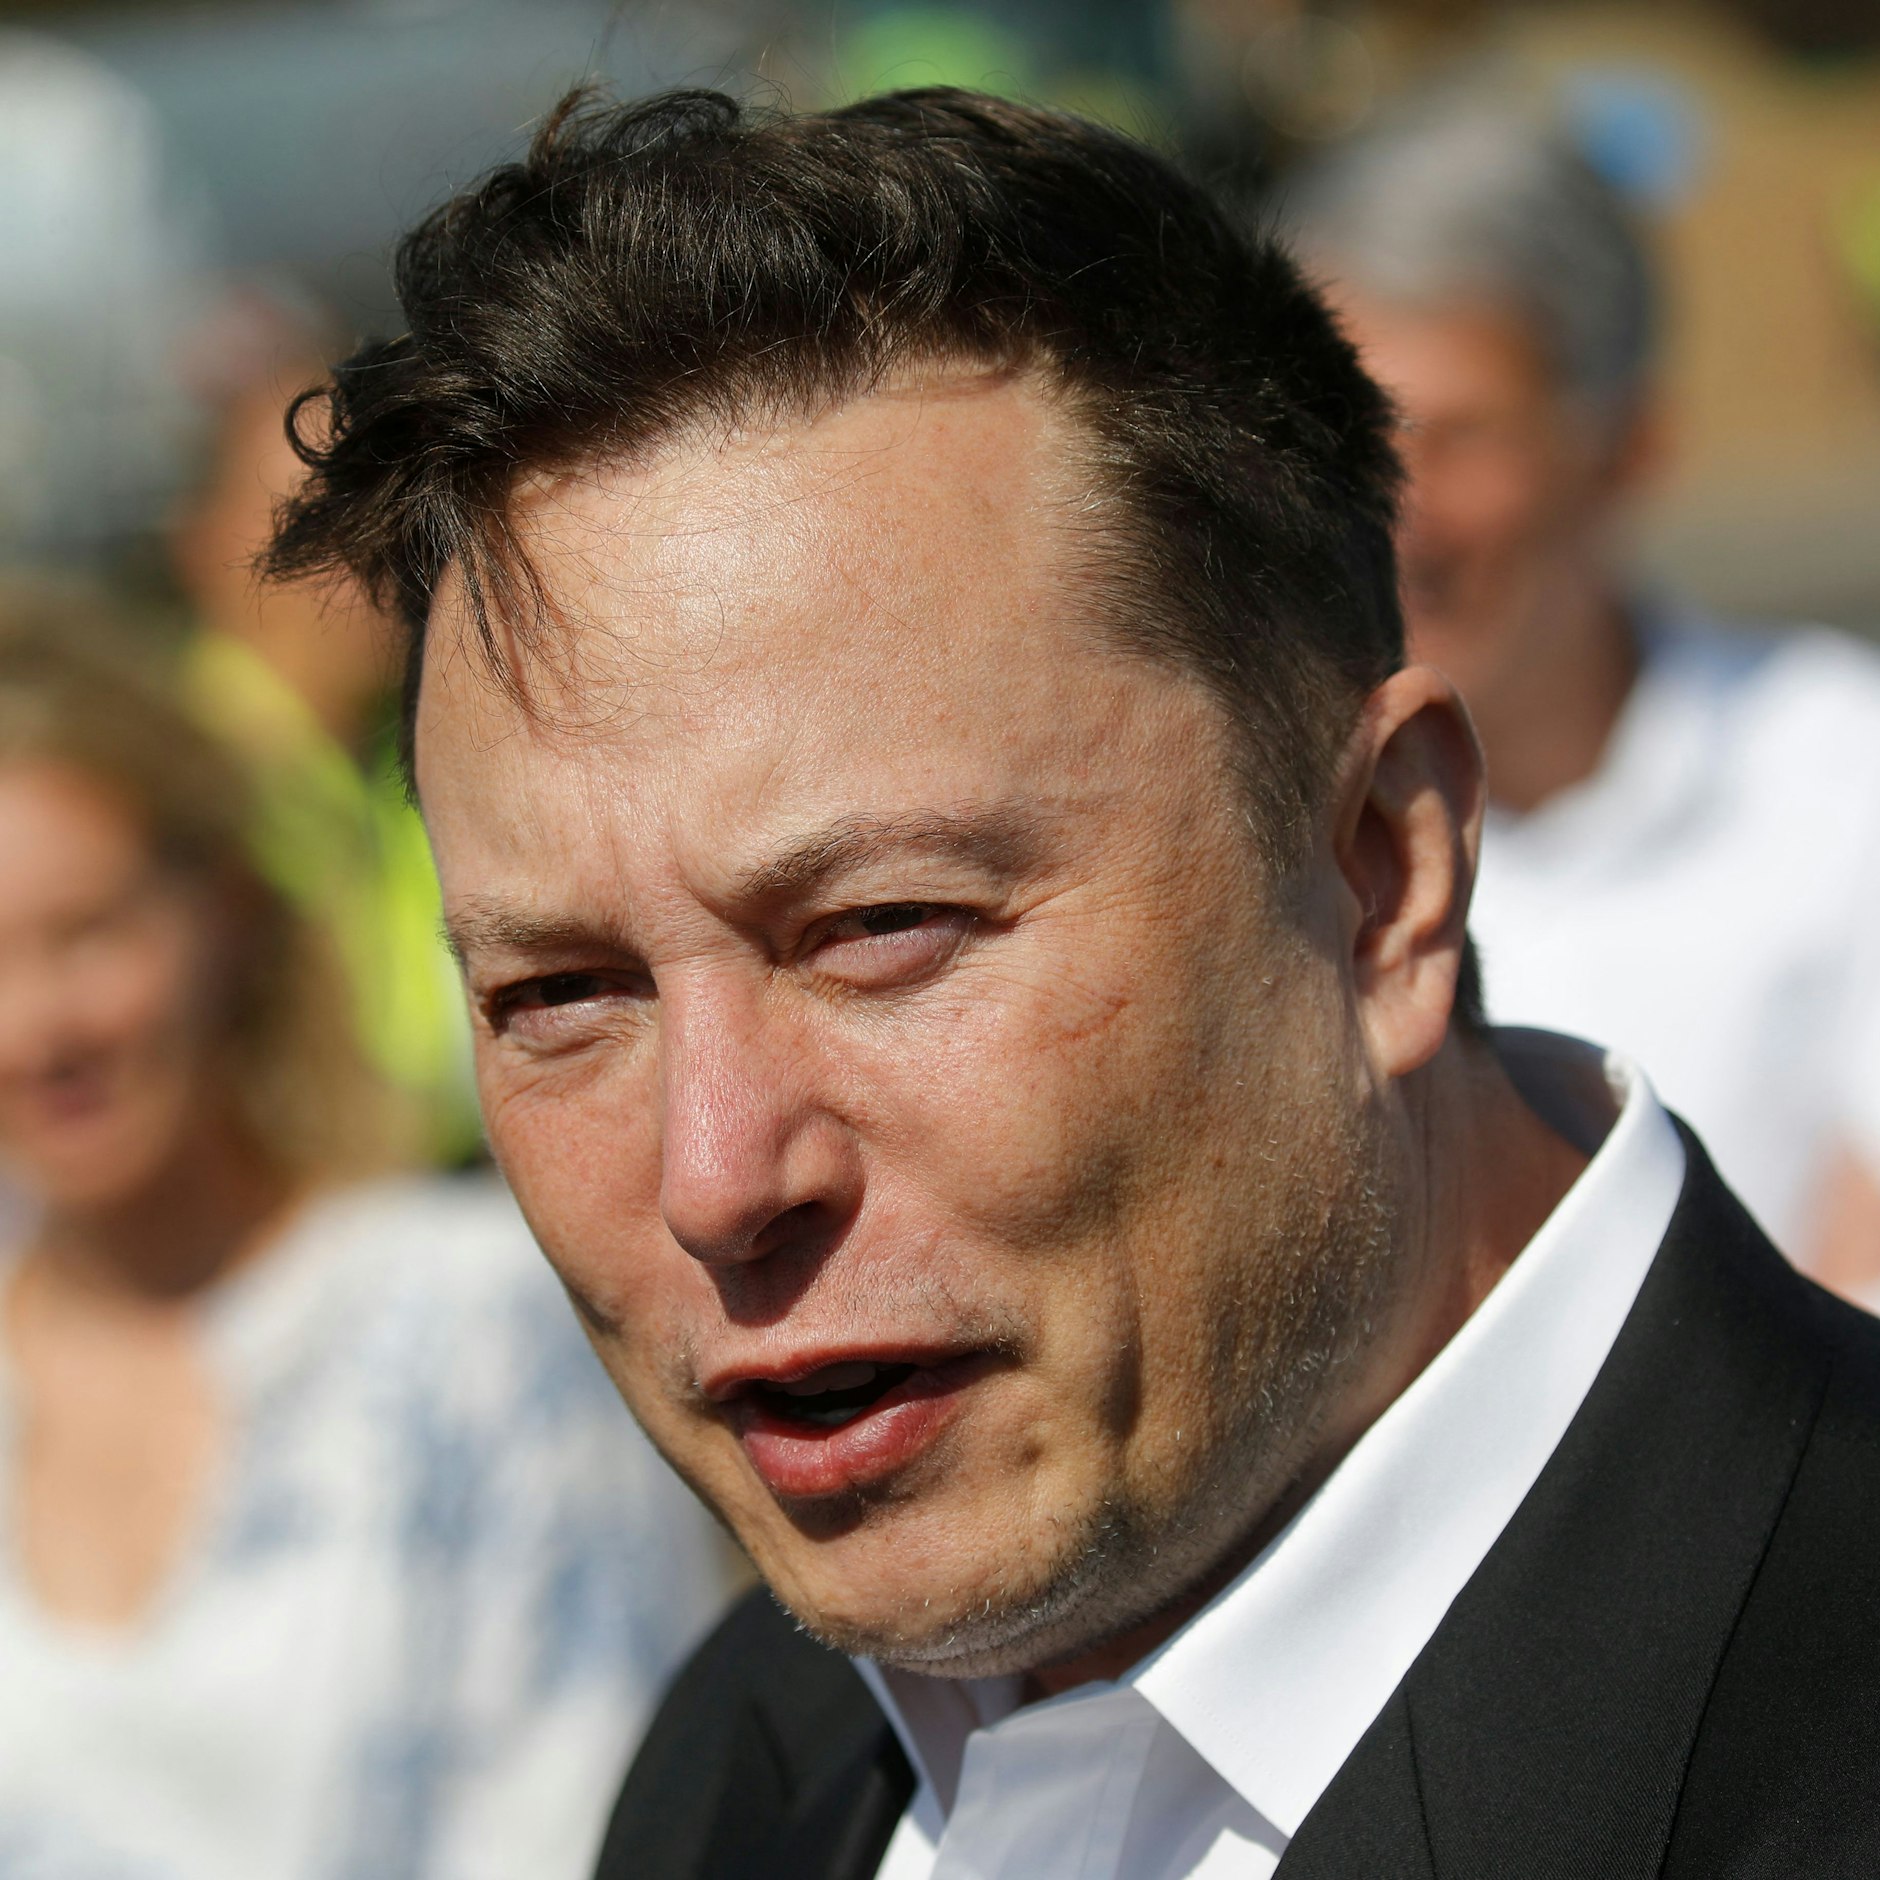 Image - Greenwashing-Vorwürfe: Verbraucherzentrale verklagt Tesla